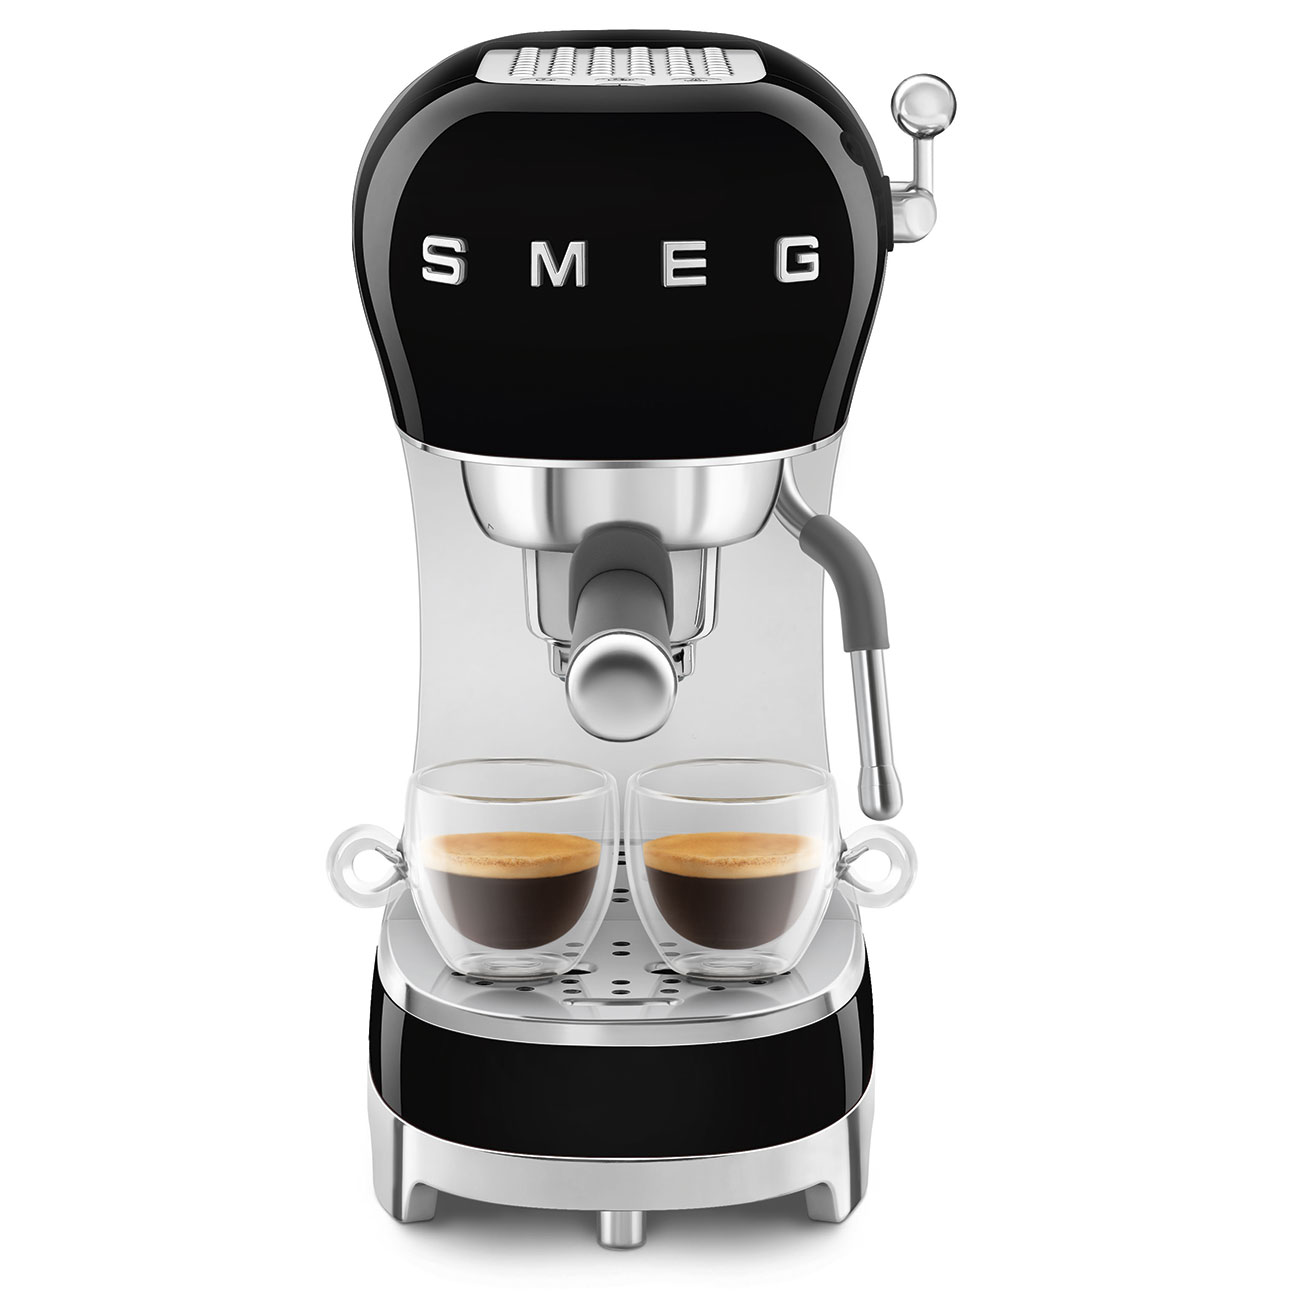 Smeg Black Espresso Manual Coffee Machine with Steam Wand_5